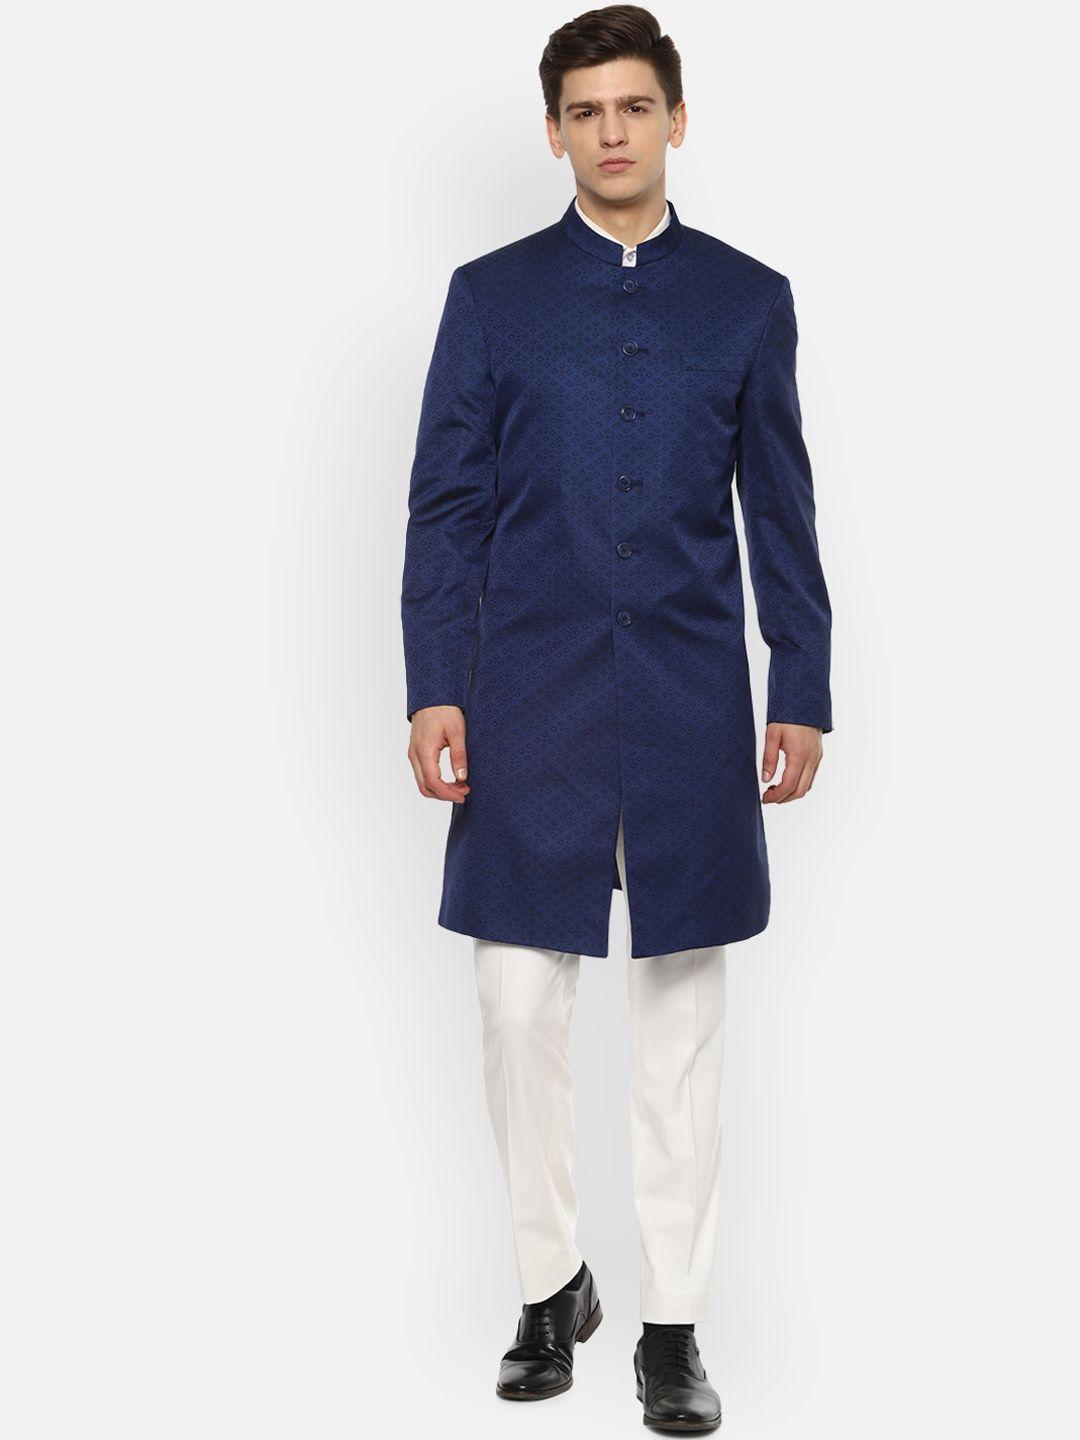 v dot men navy blue & white self-design slim-fit bandhgala suit